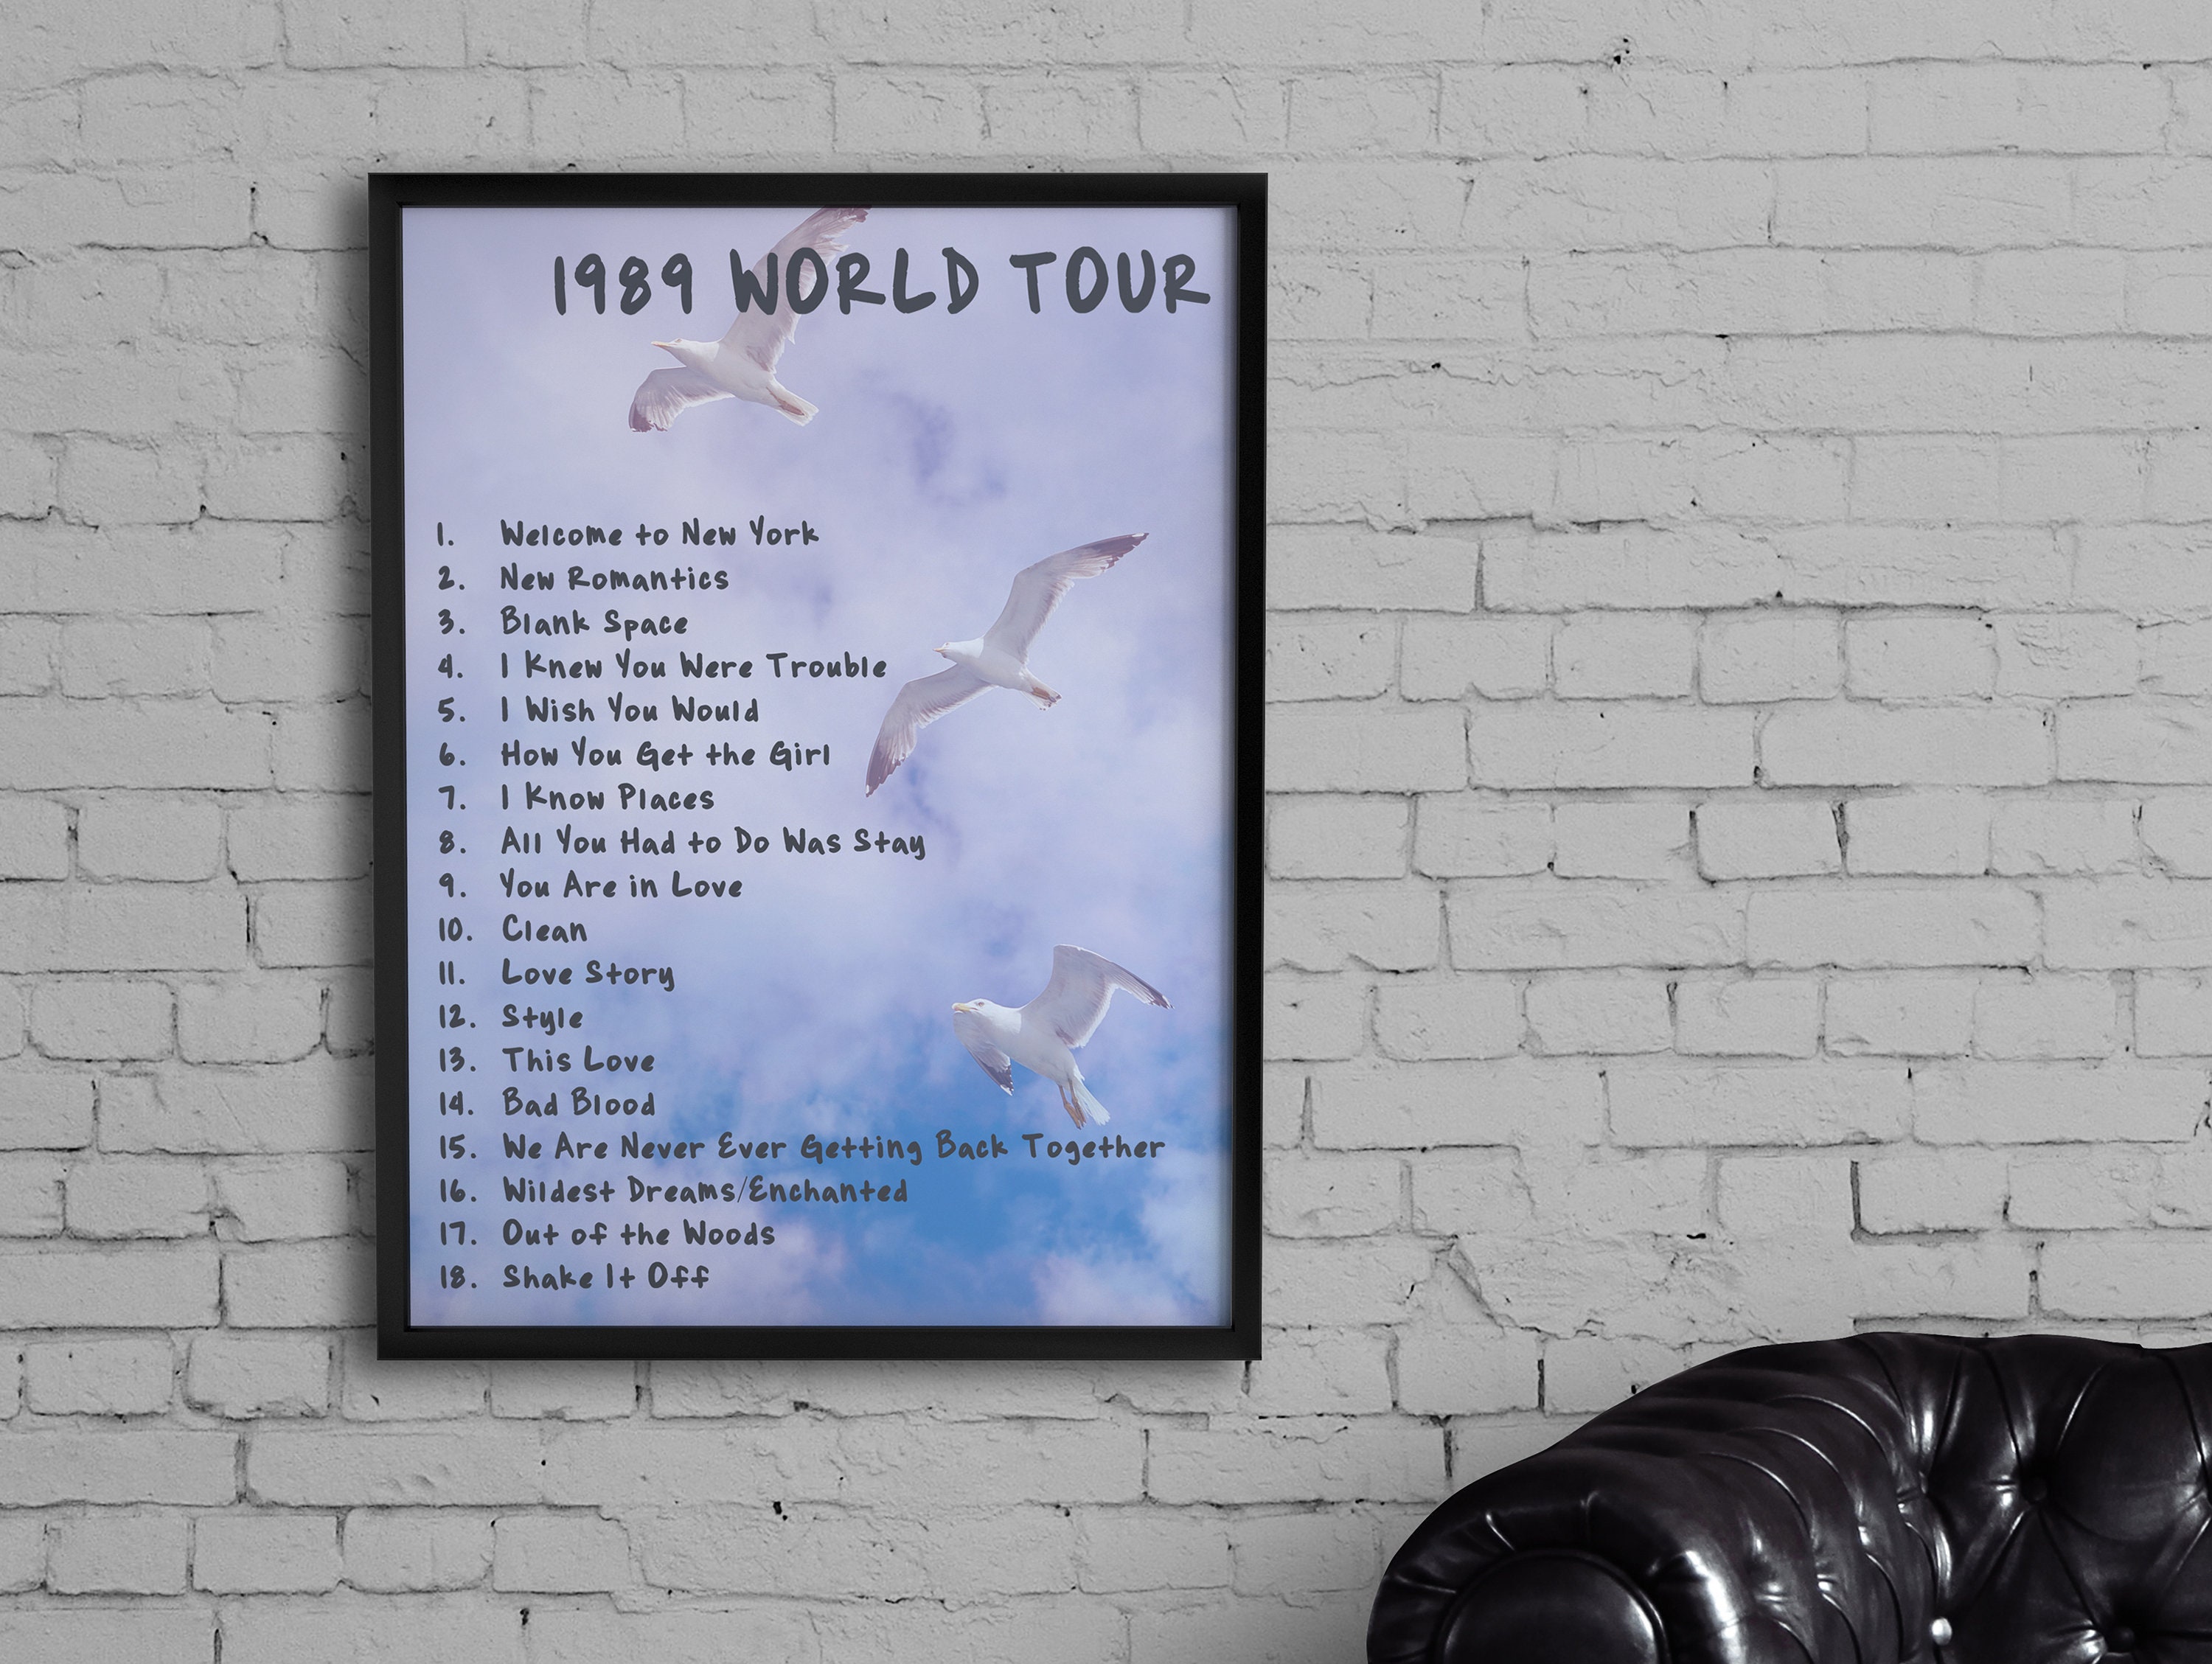 the 1989 world tour dates